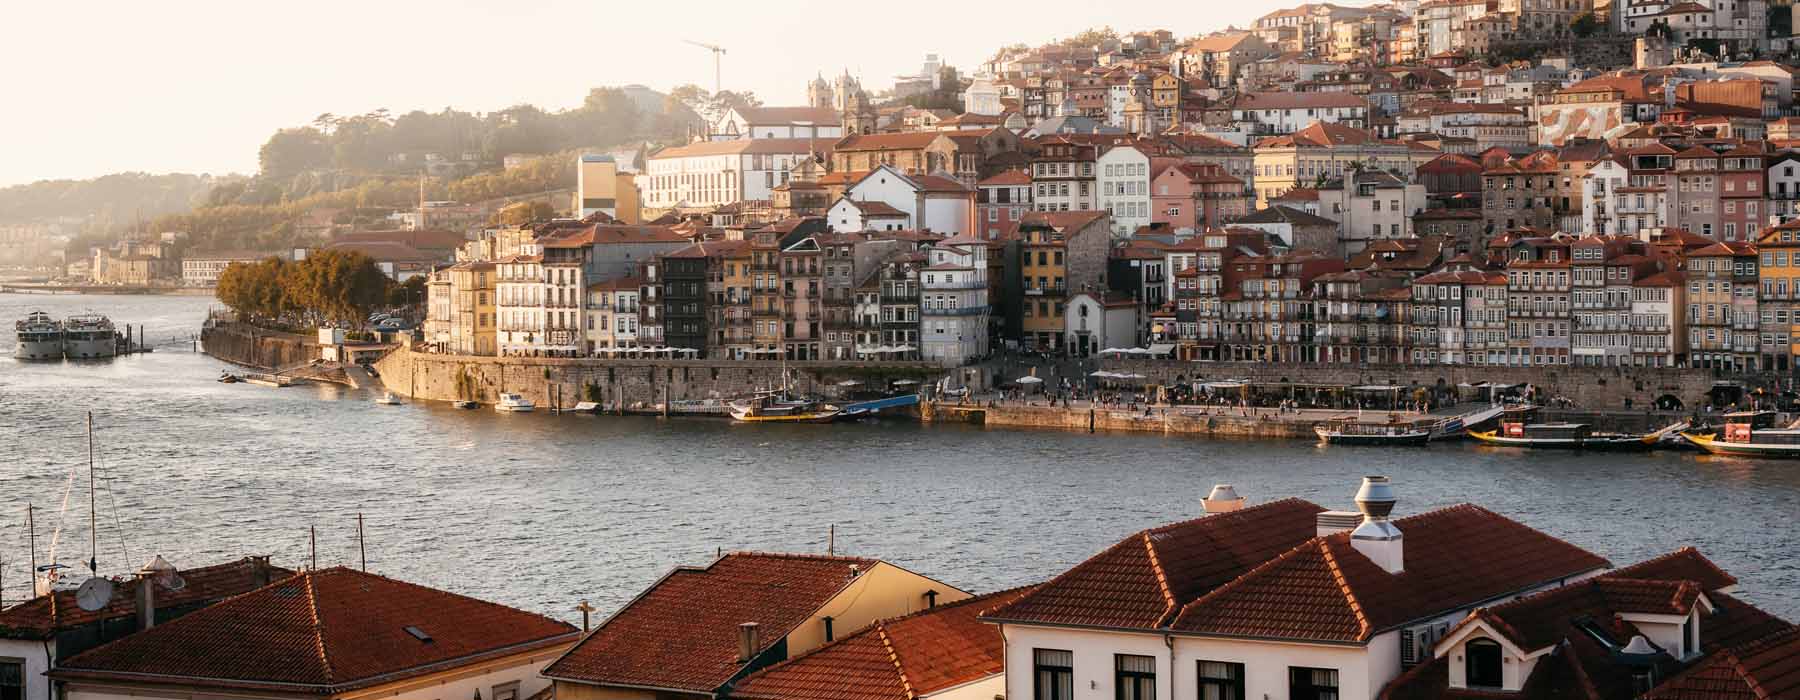 Portugal<br class="hidden-md hidden-lg" /> Luxury Holidays